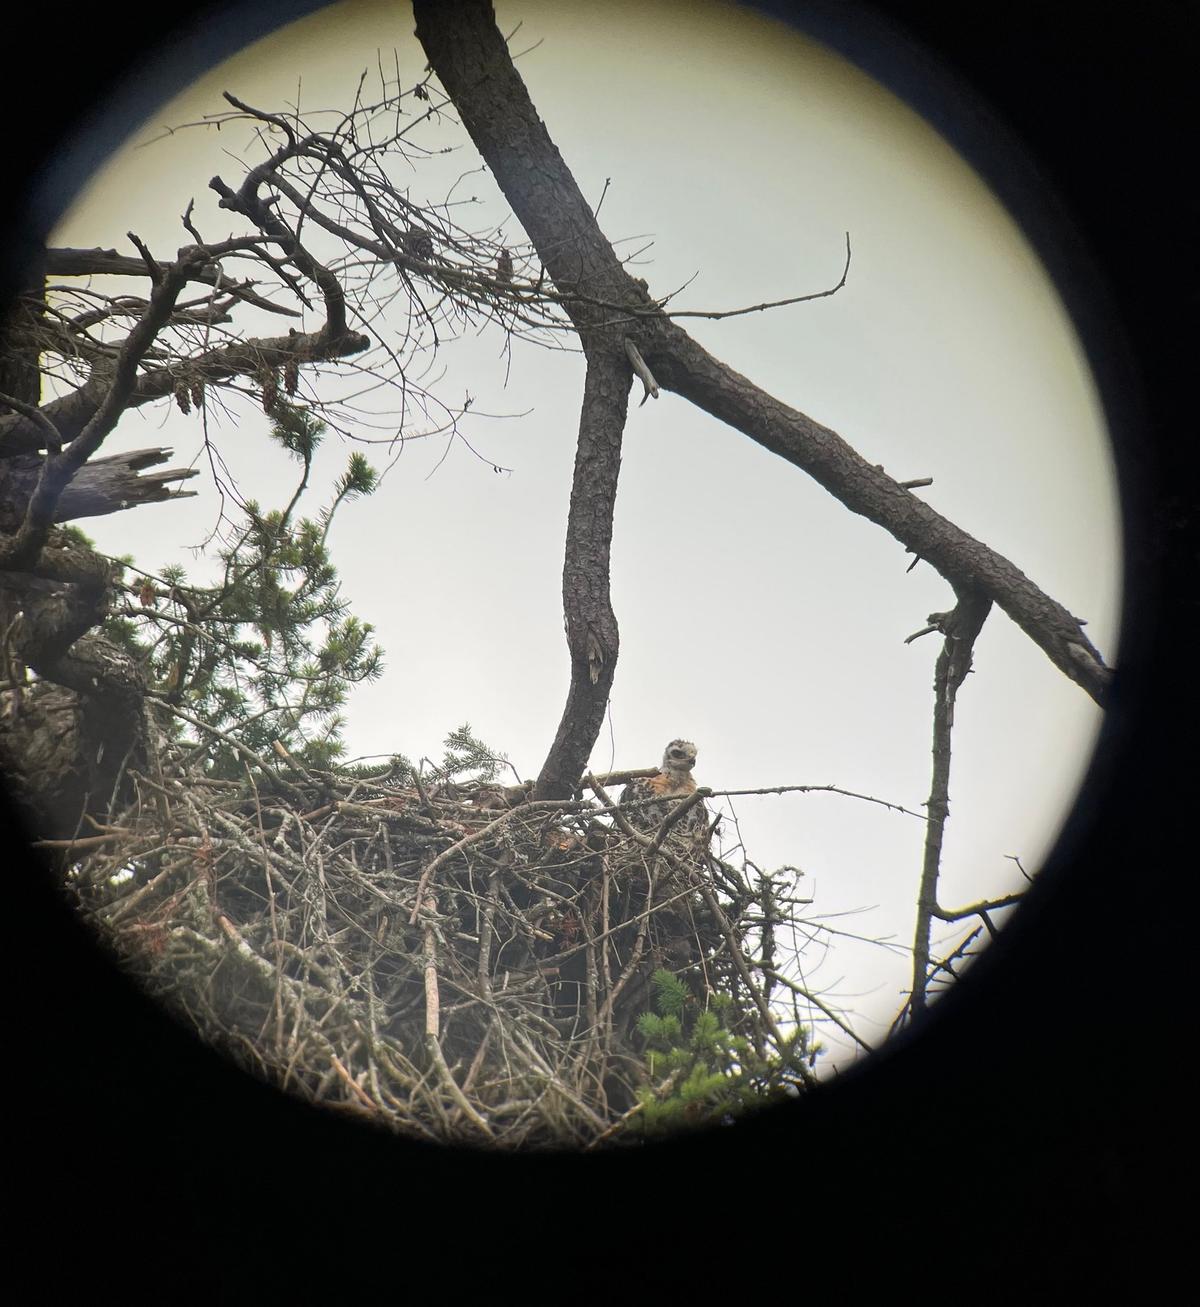 A baby red-tailed hawklet in a bald eagle's nest on Gabriola Island in B.C. (Courtesy of <a href="https://www.facebook.com/GROWLSOFGABRIOLA/">Pam McCartney, Growls</a>)